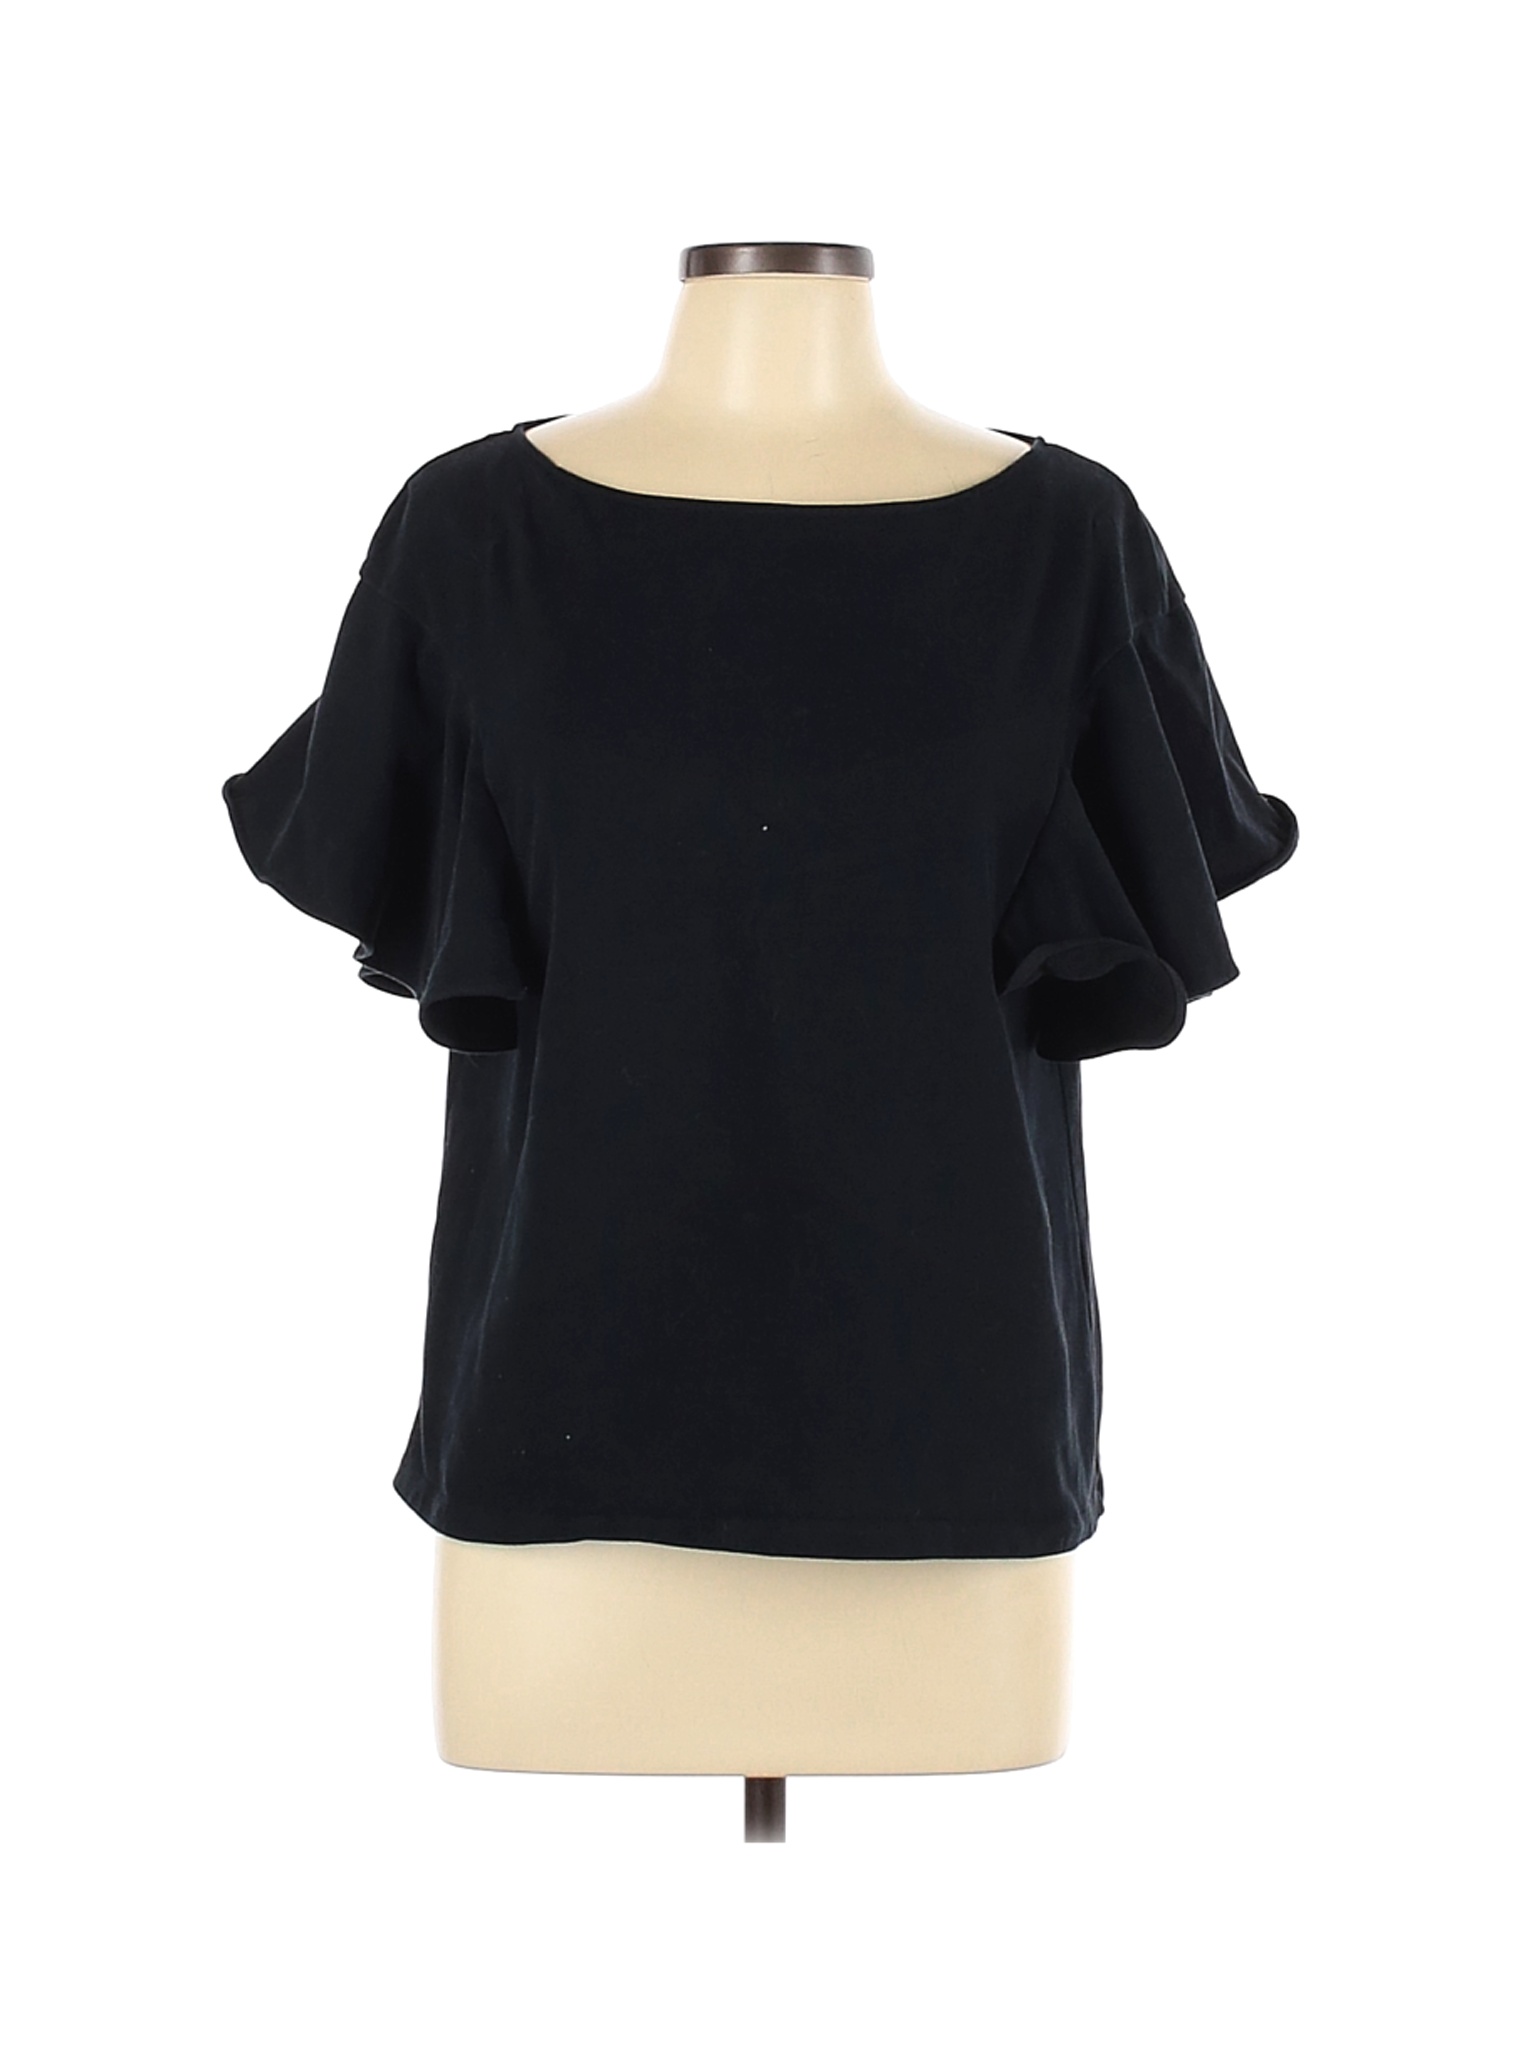 Banana Republic Women Black Short Sleeve Top L | eBay